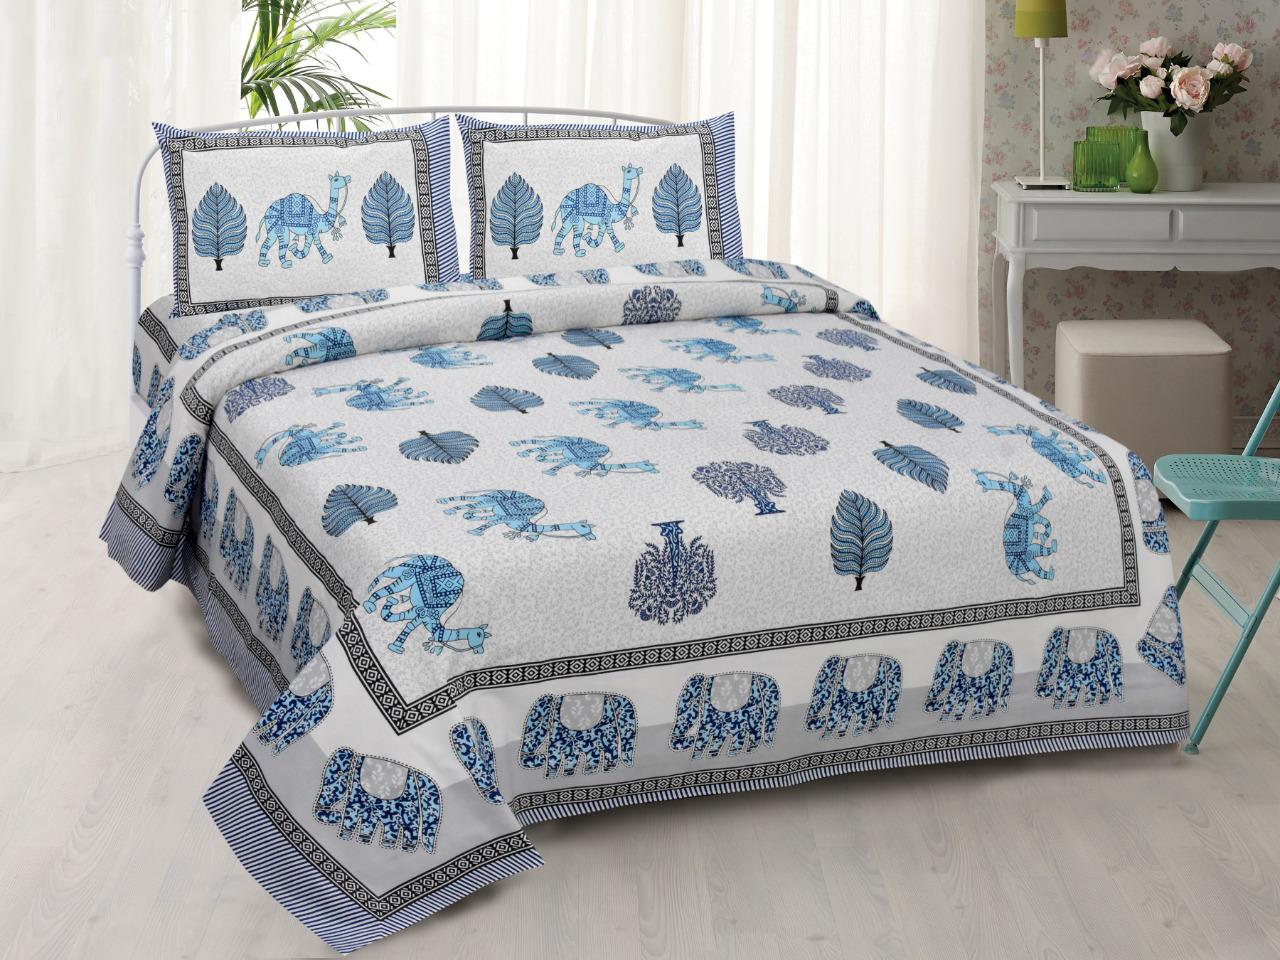 Rajasthani Traditional White base Blue Animal Print King Size Cotton Bed Sheet